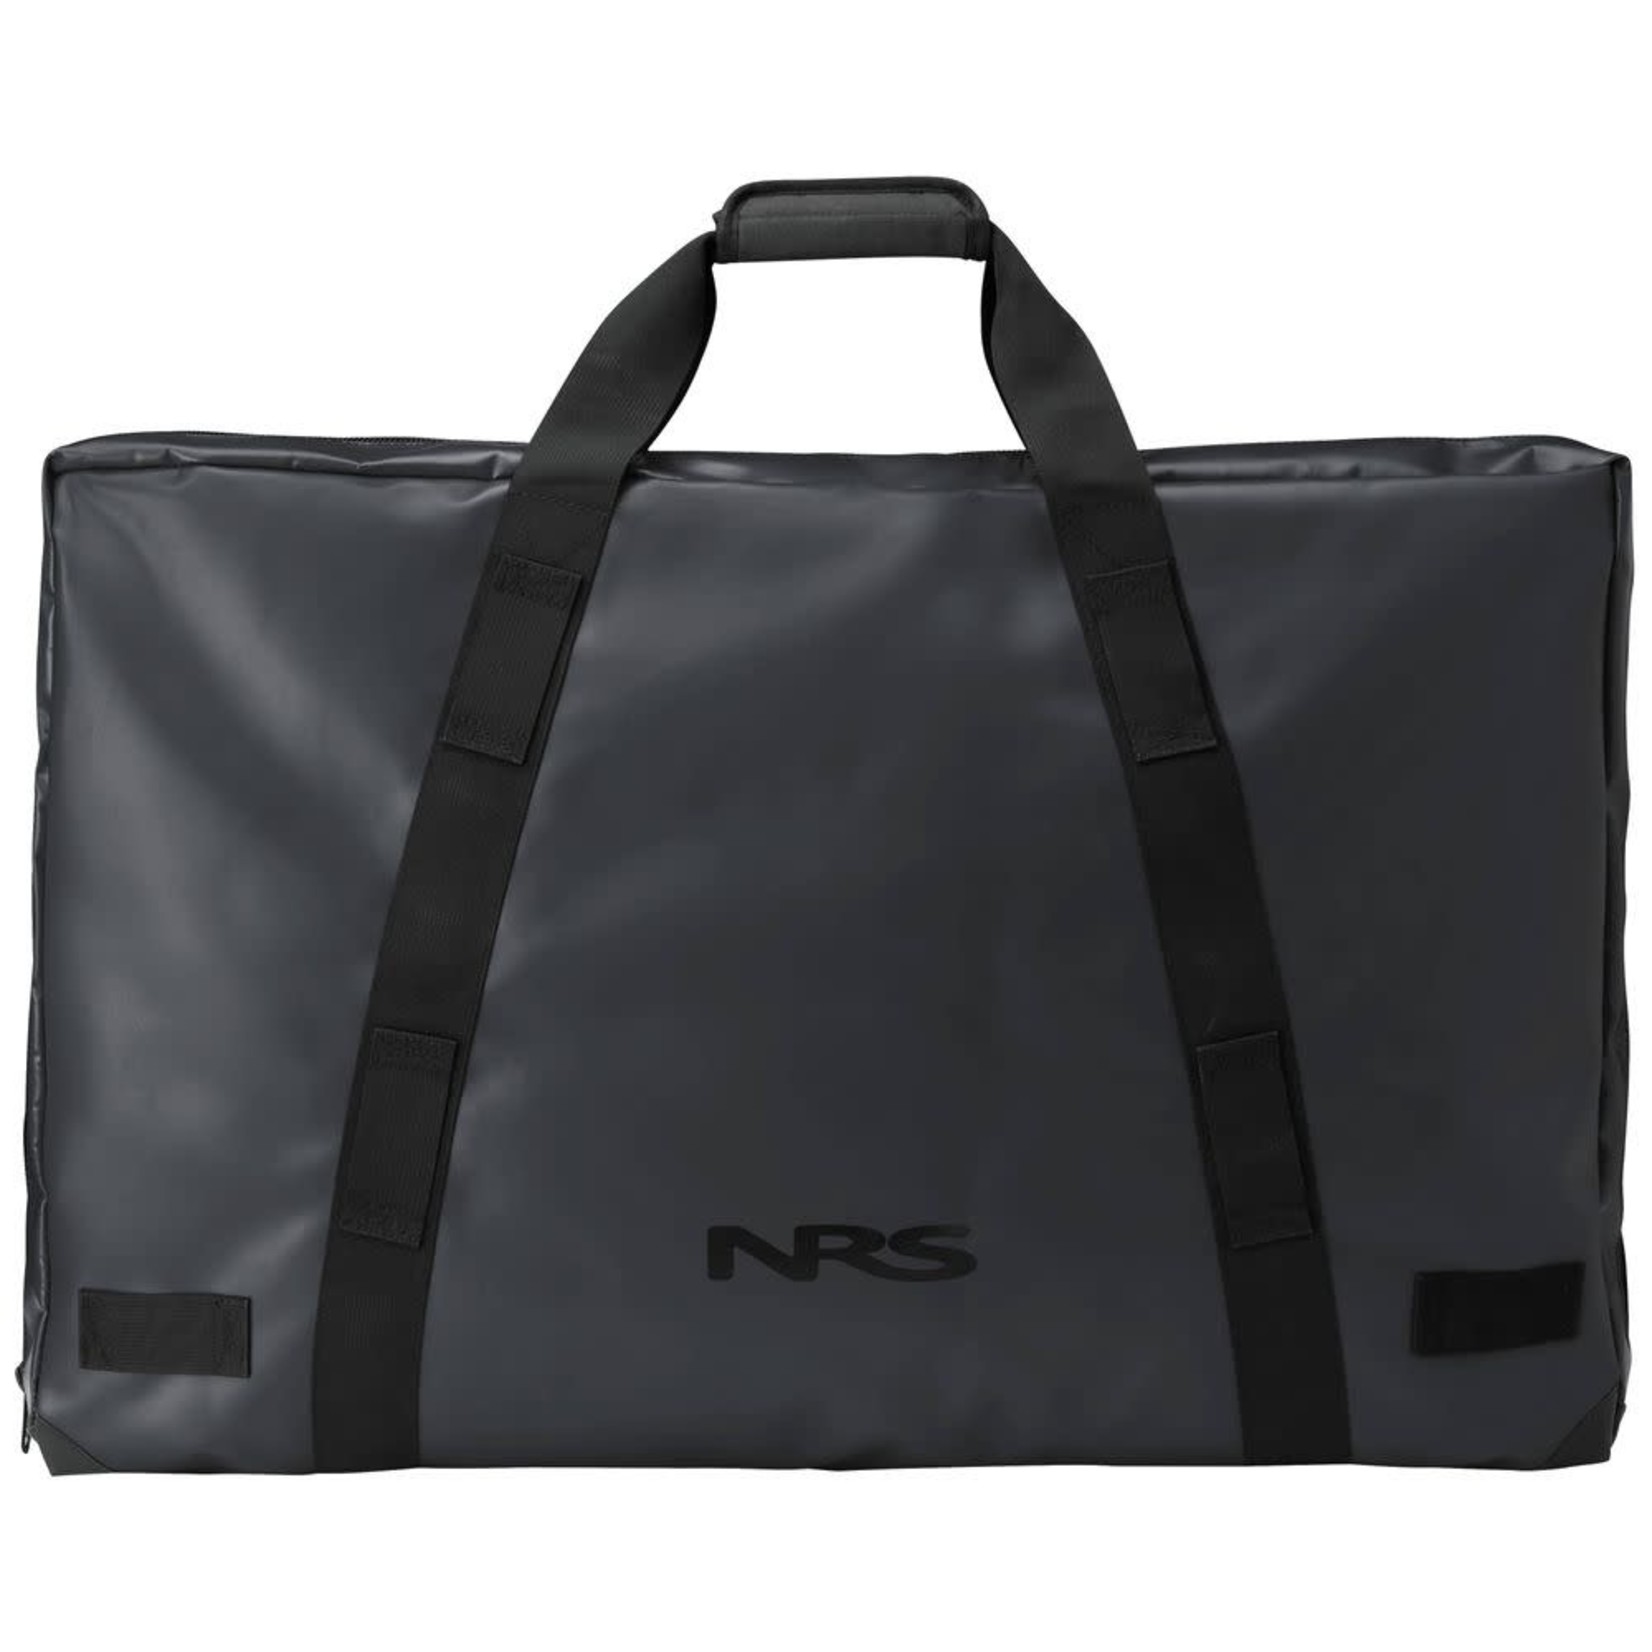 NRS NRS Fire Pan Storage Bag